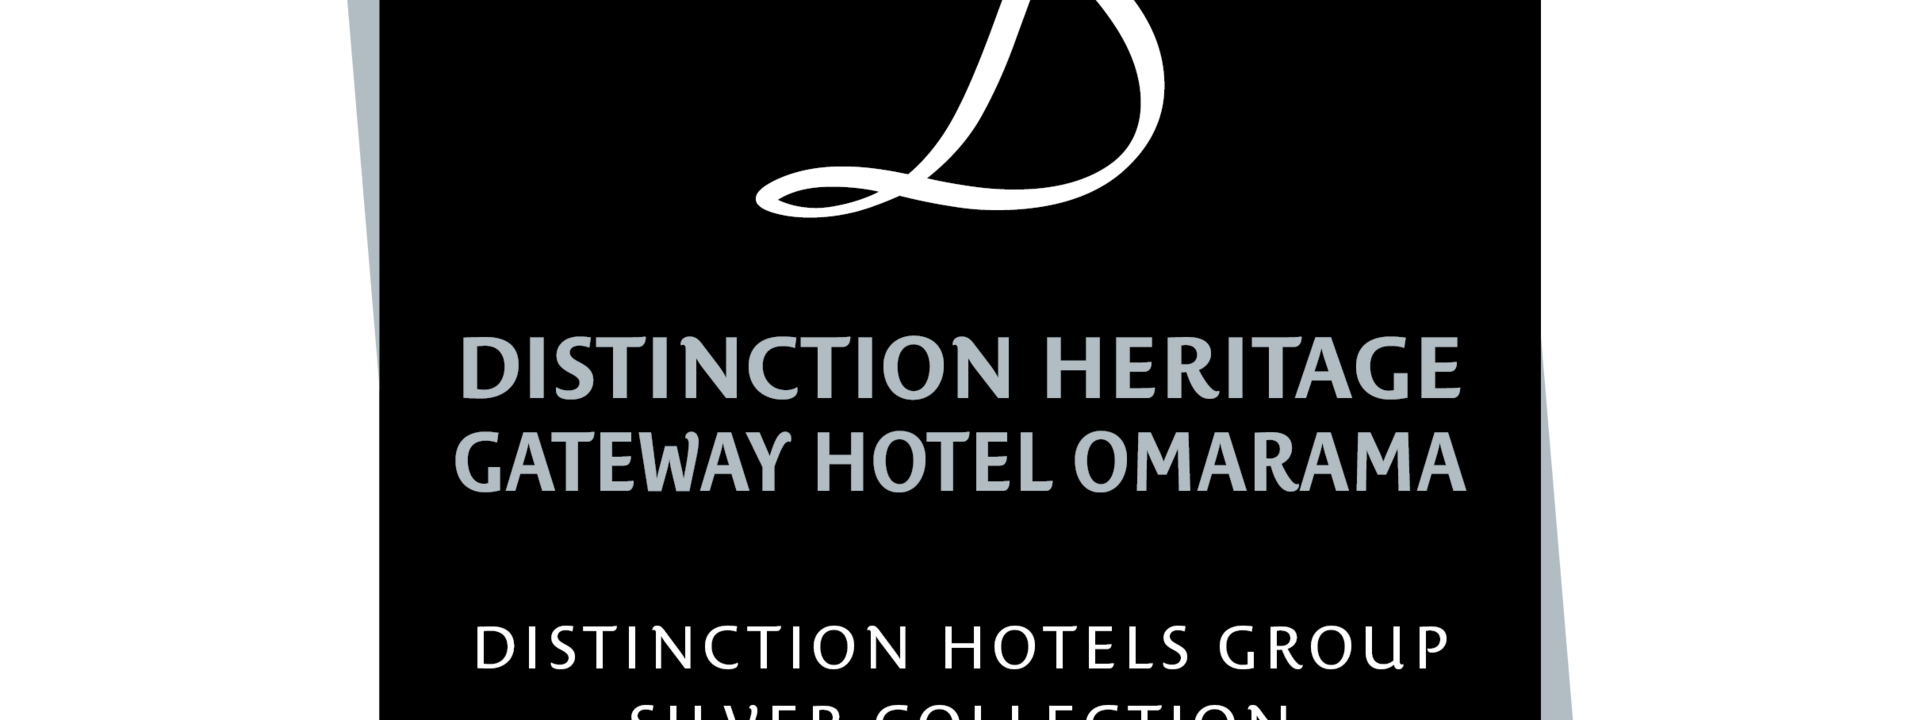 Distinction Heritage Gateway Hotel Omarama logo4.png